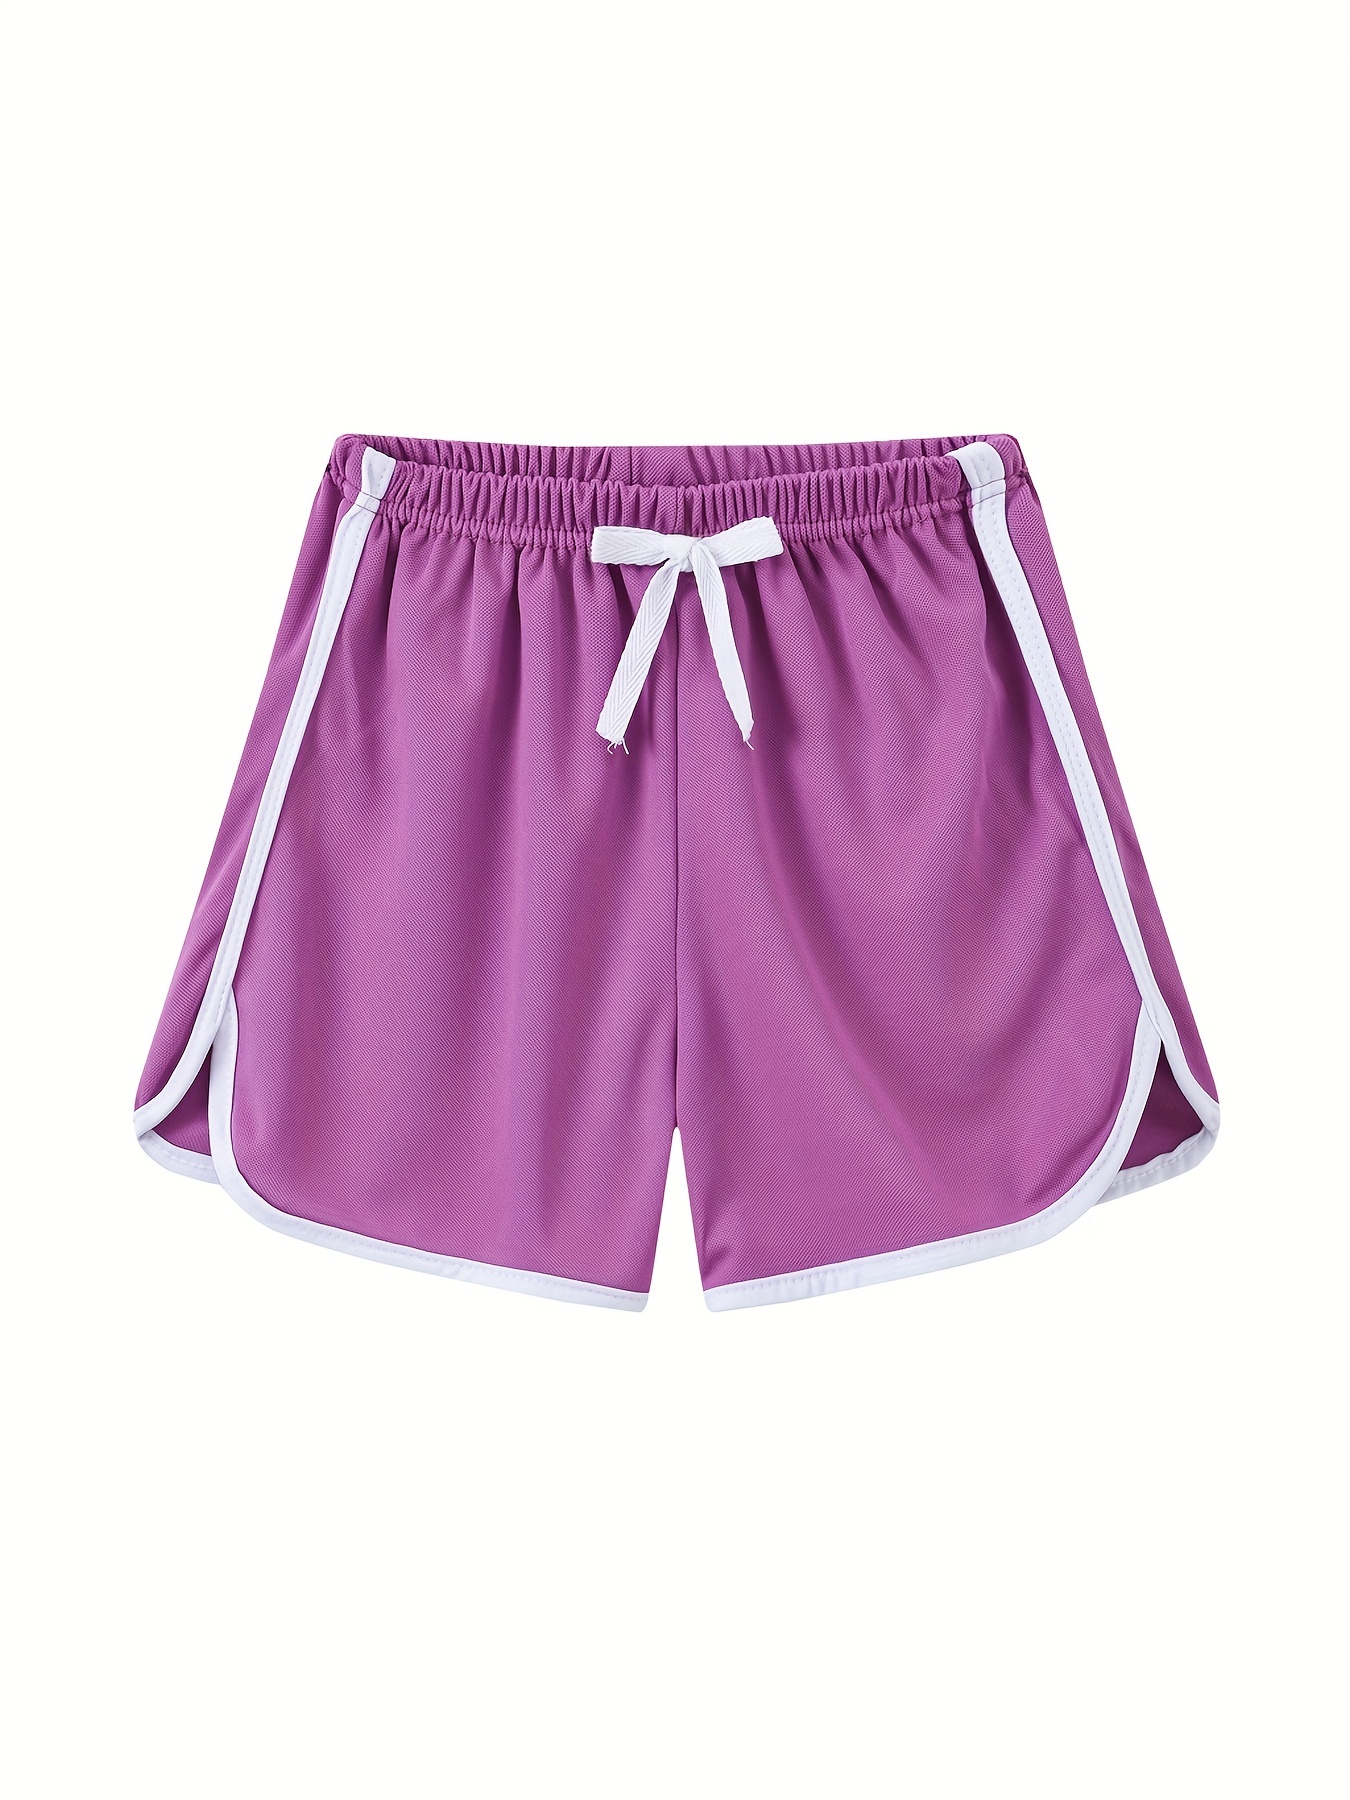 Summer Shorts for Kids Girls Solid Color Clothes Denim Shorts